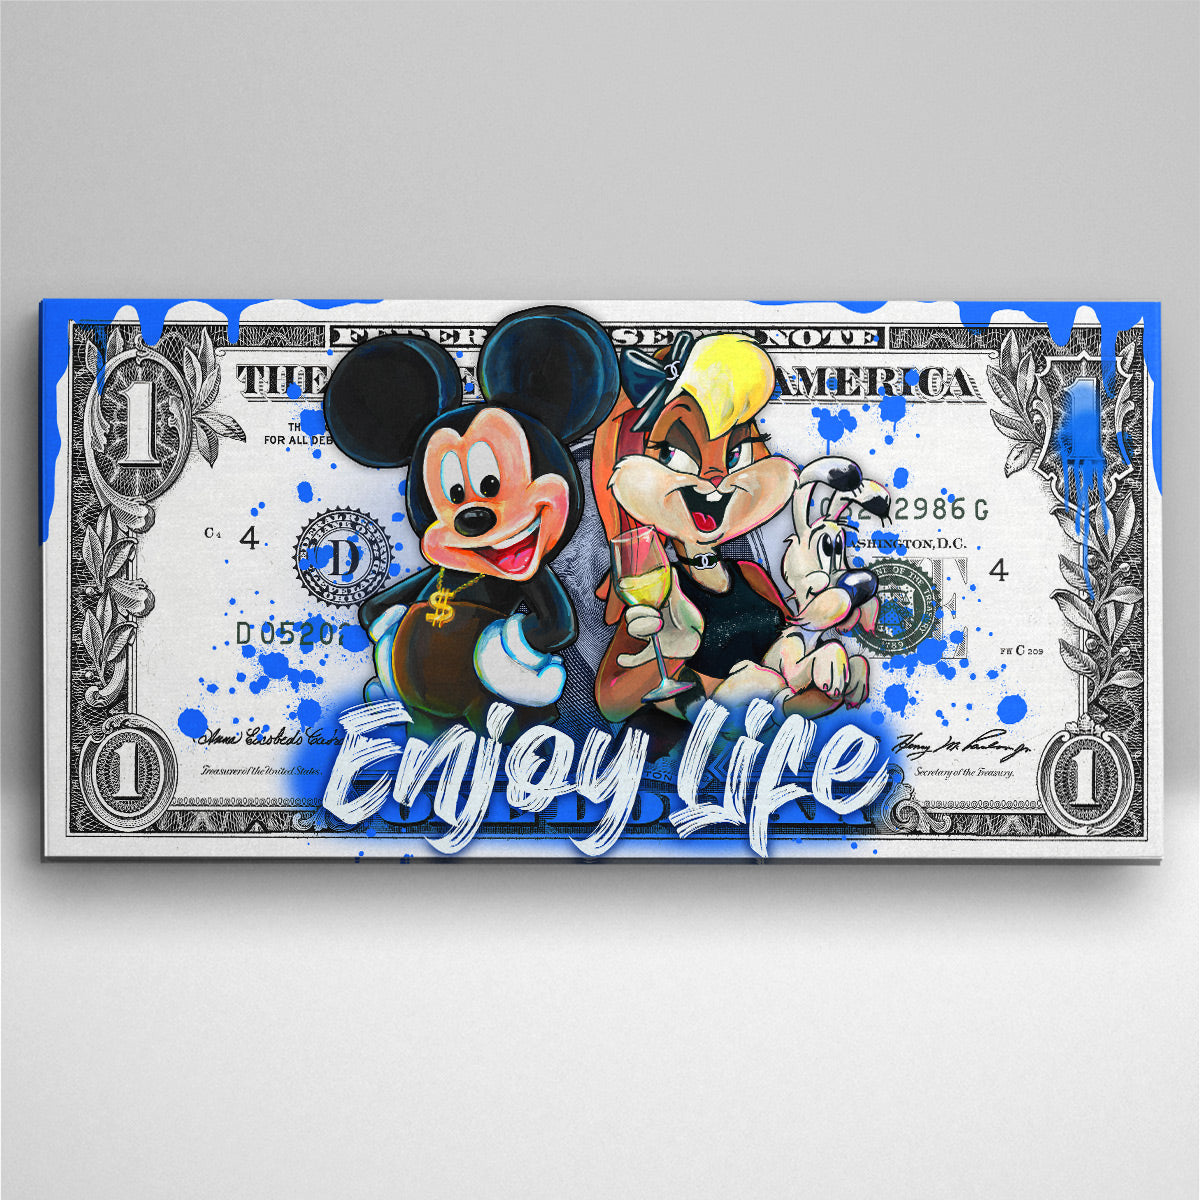 Enjoy Life - Cash Art